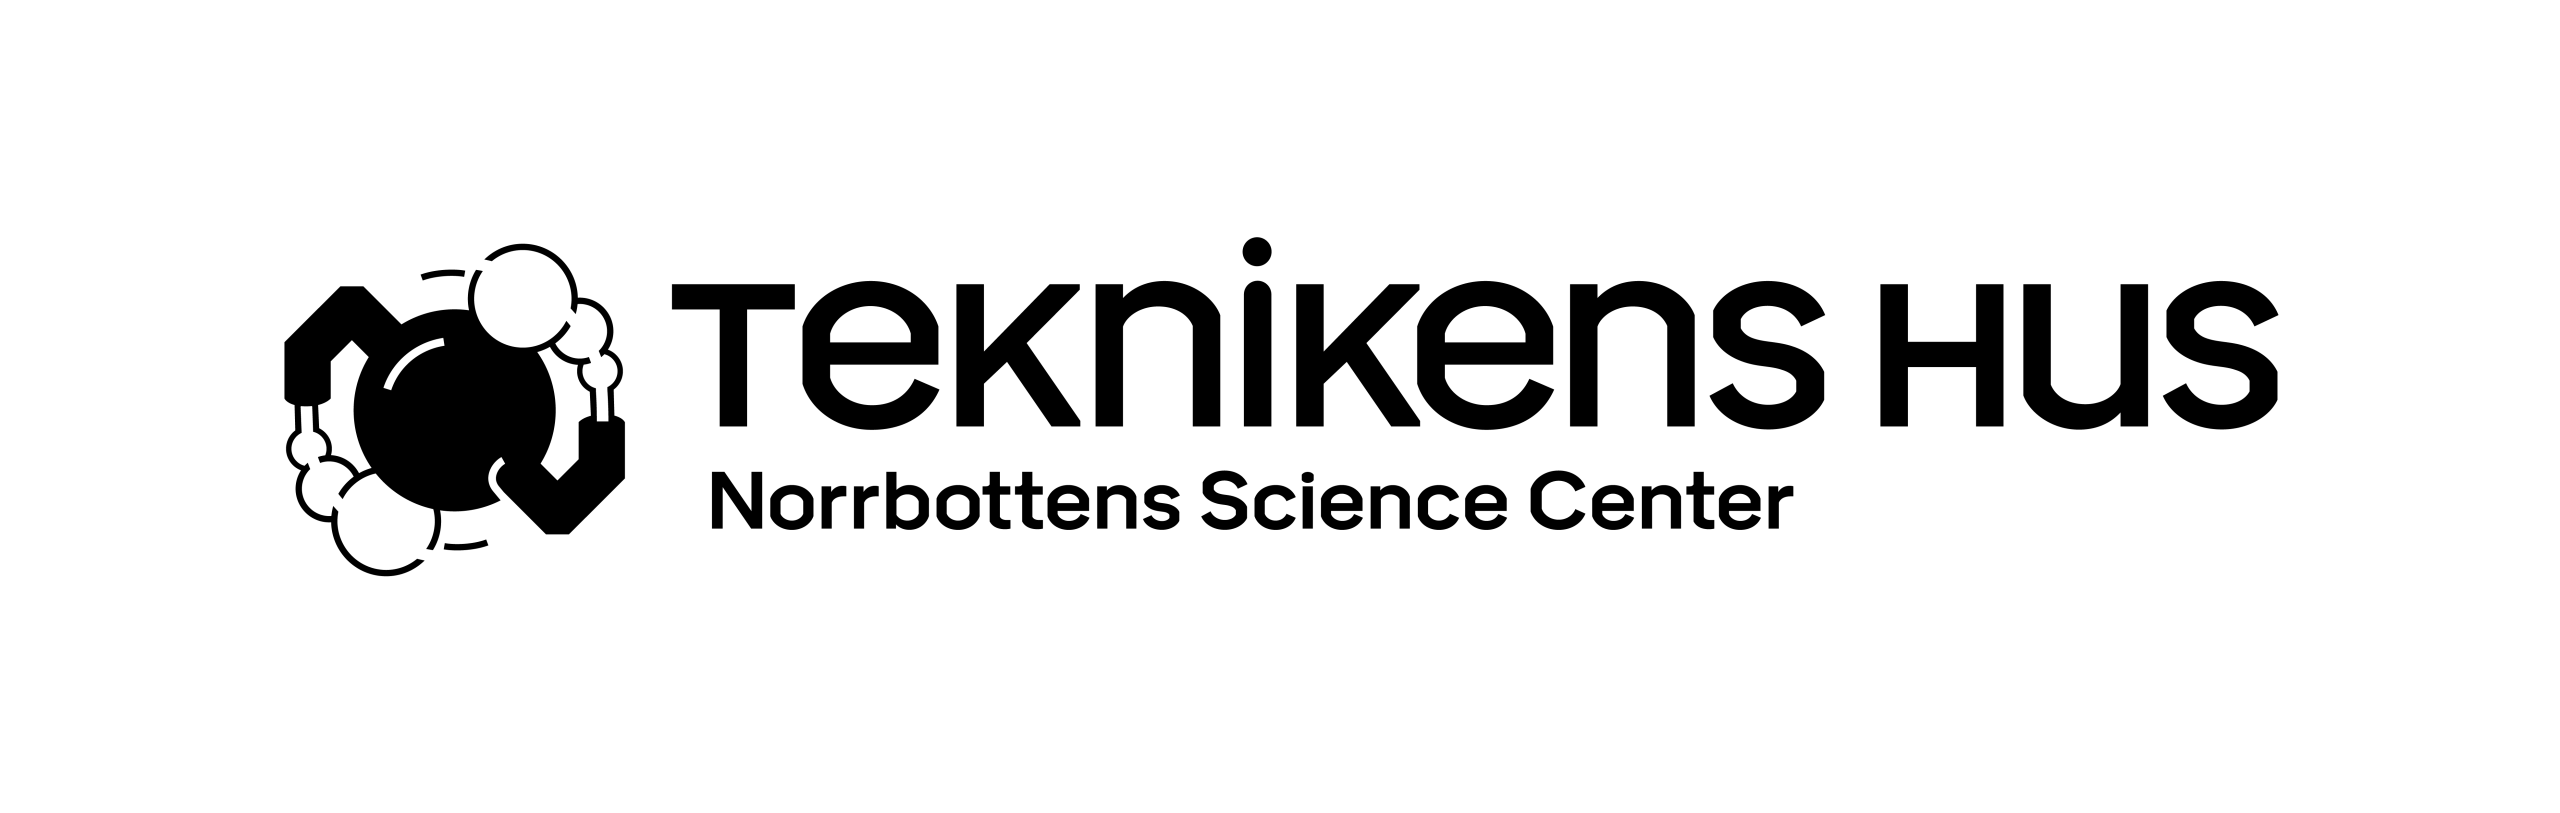 TH-logo-liggande-svart-NSC